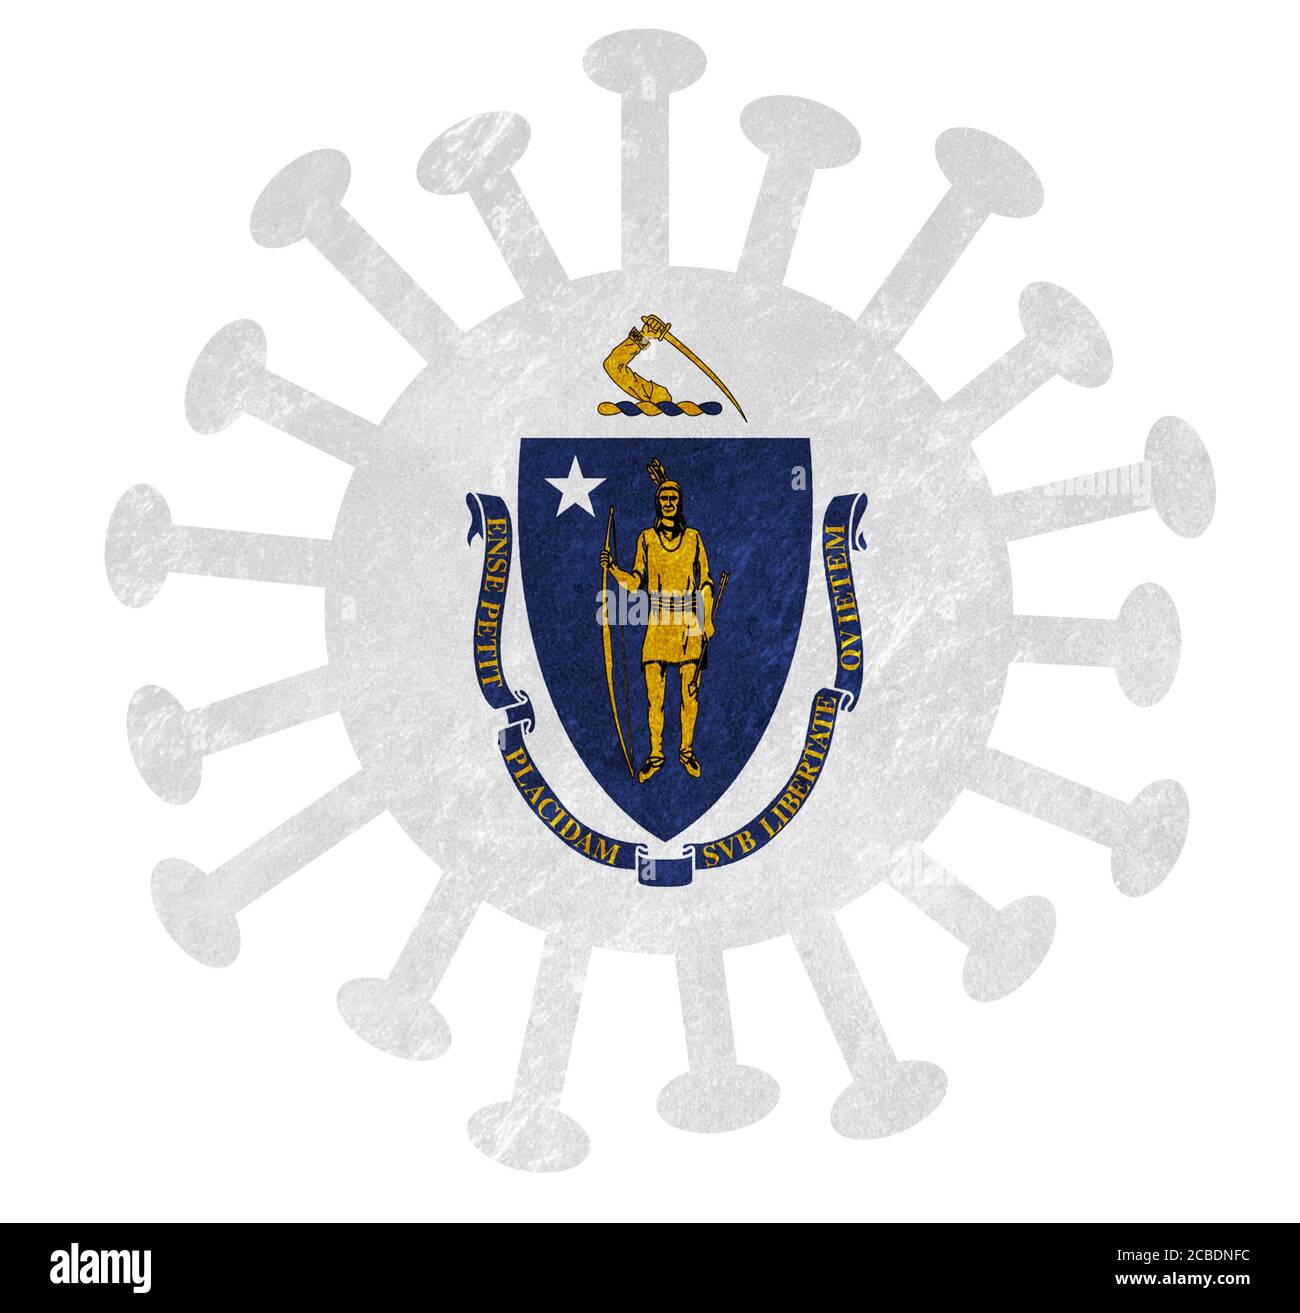 Staatsflagge von Massachusetts mit Corona-Virus oder Bakterien - Isoliert auf Weiß Stockfoto